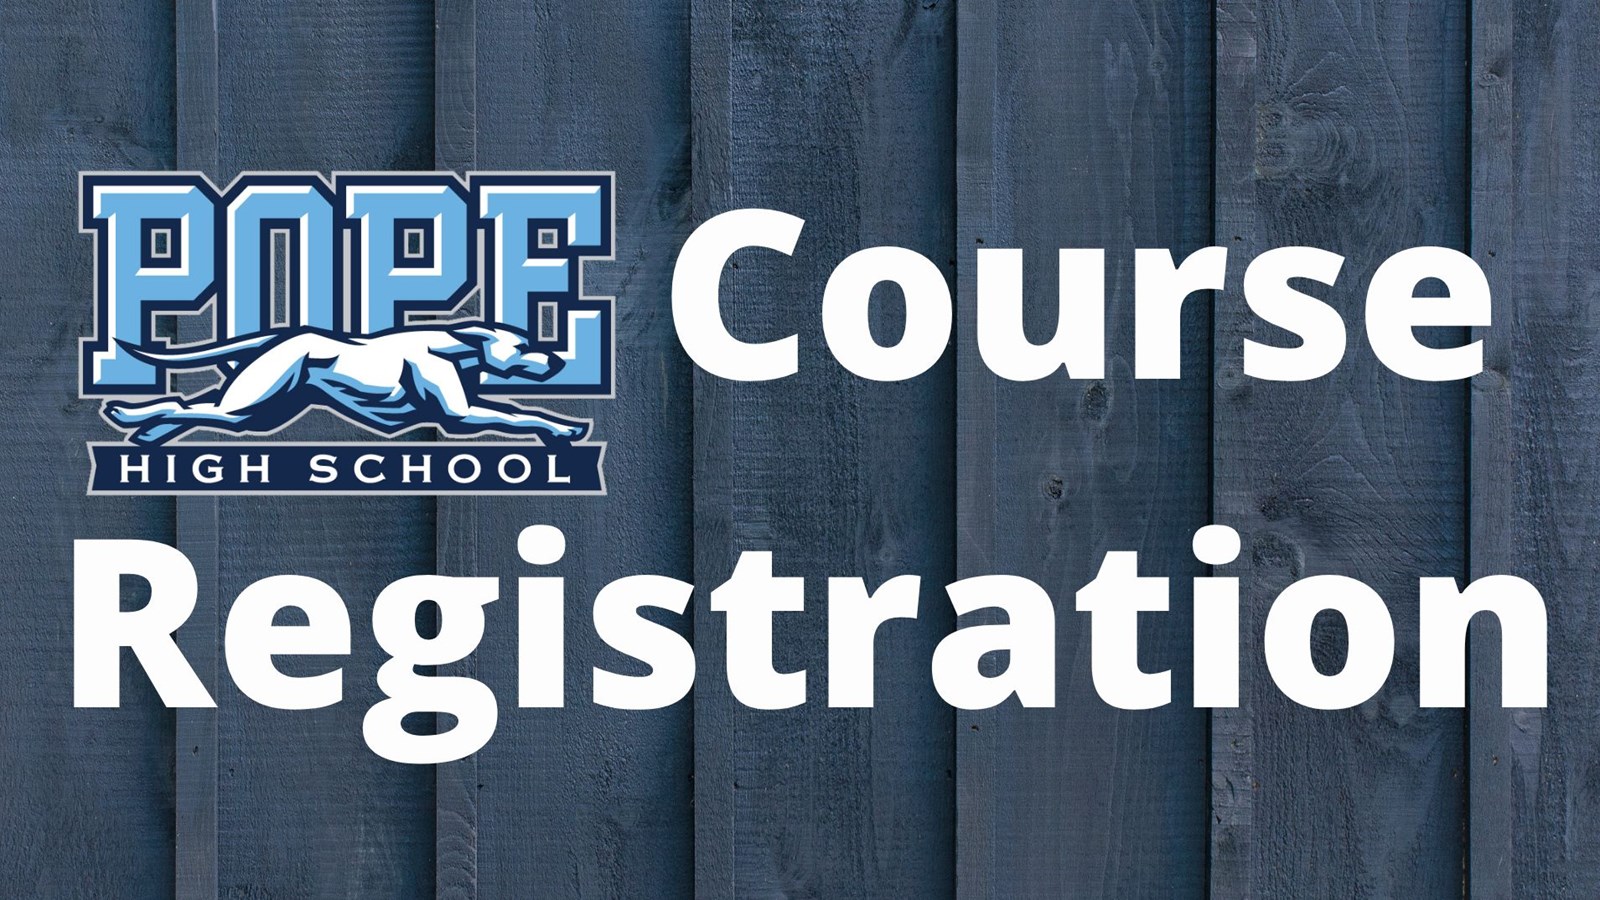 Course Catalog / Registration